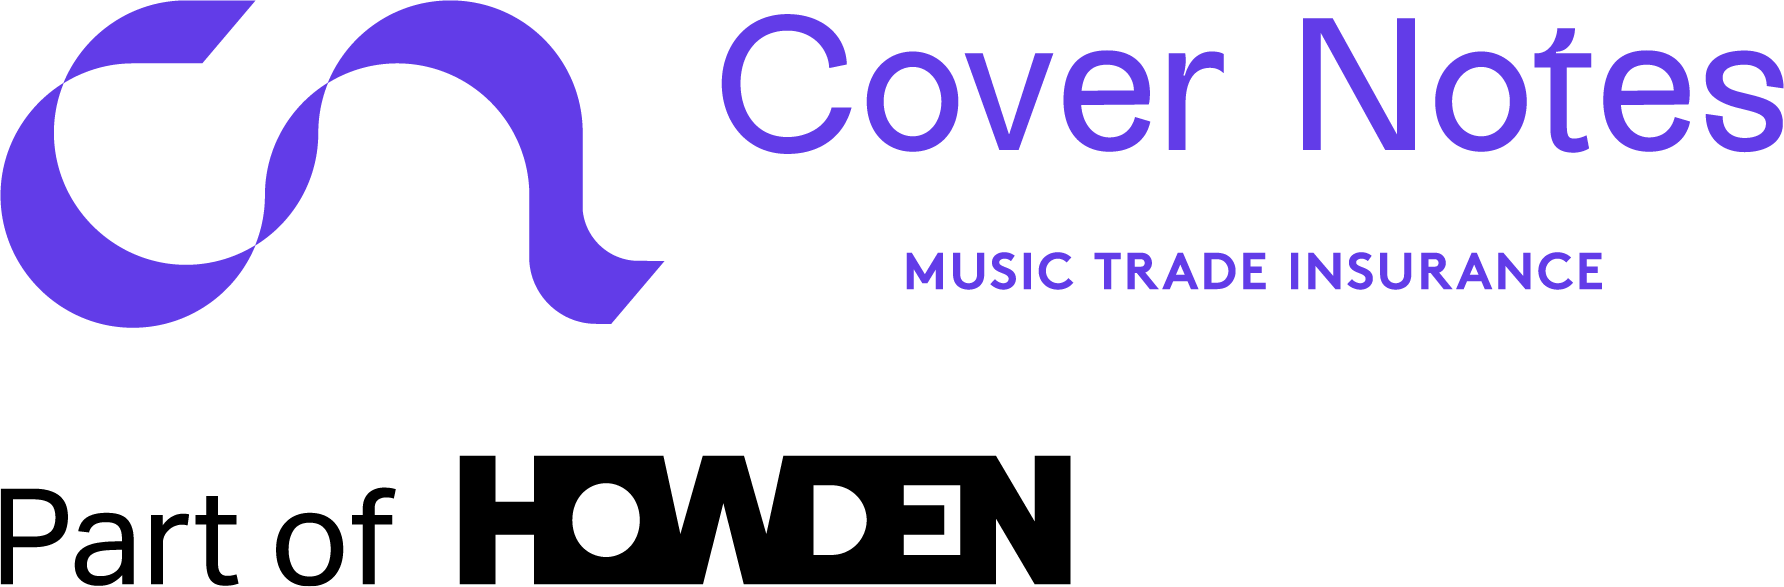 Cover Notes logo